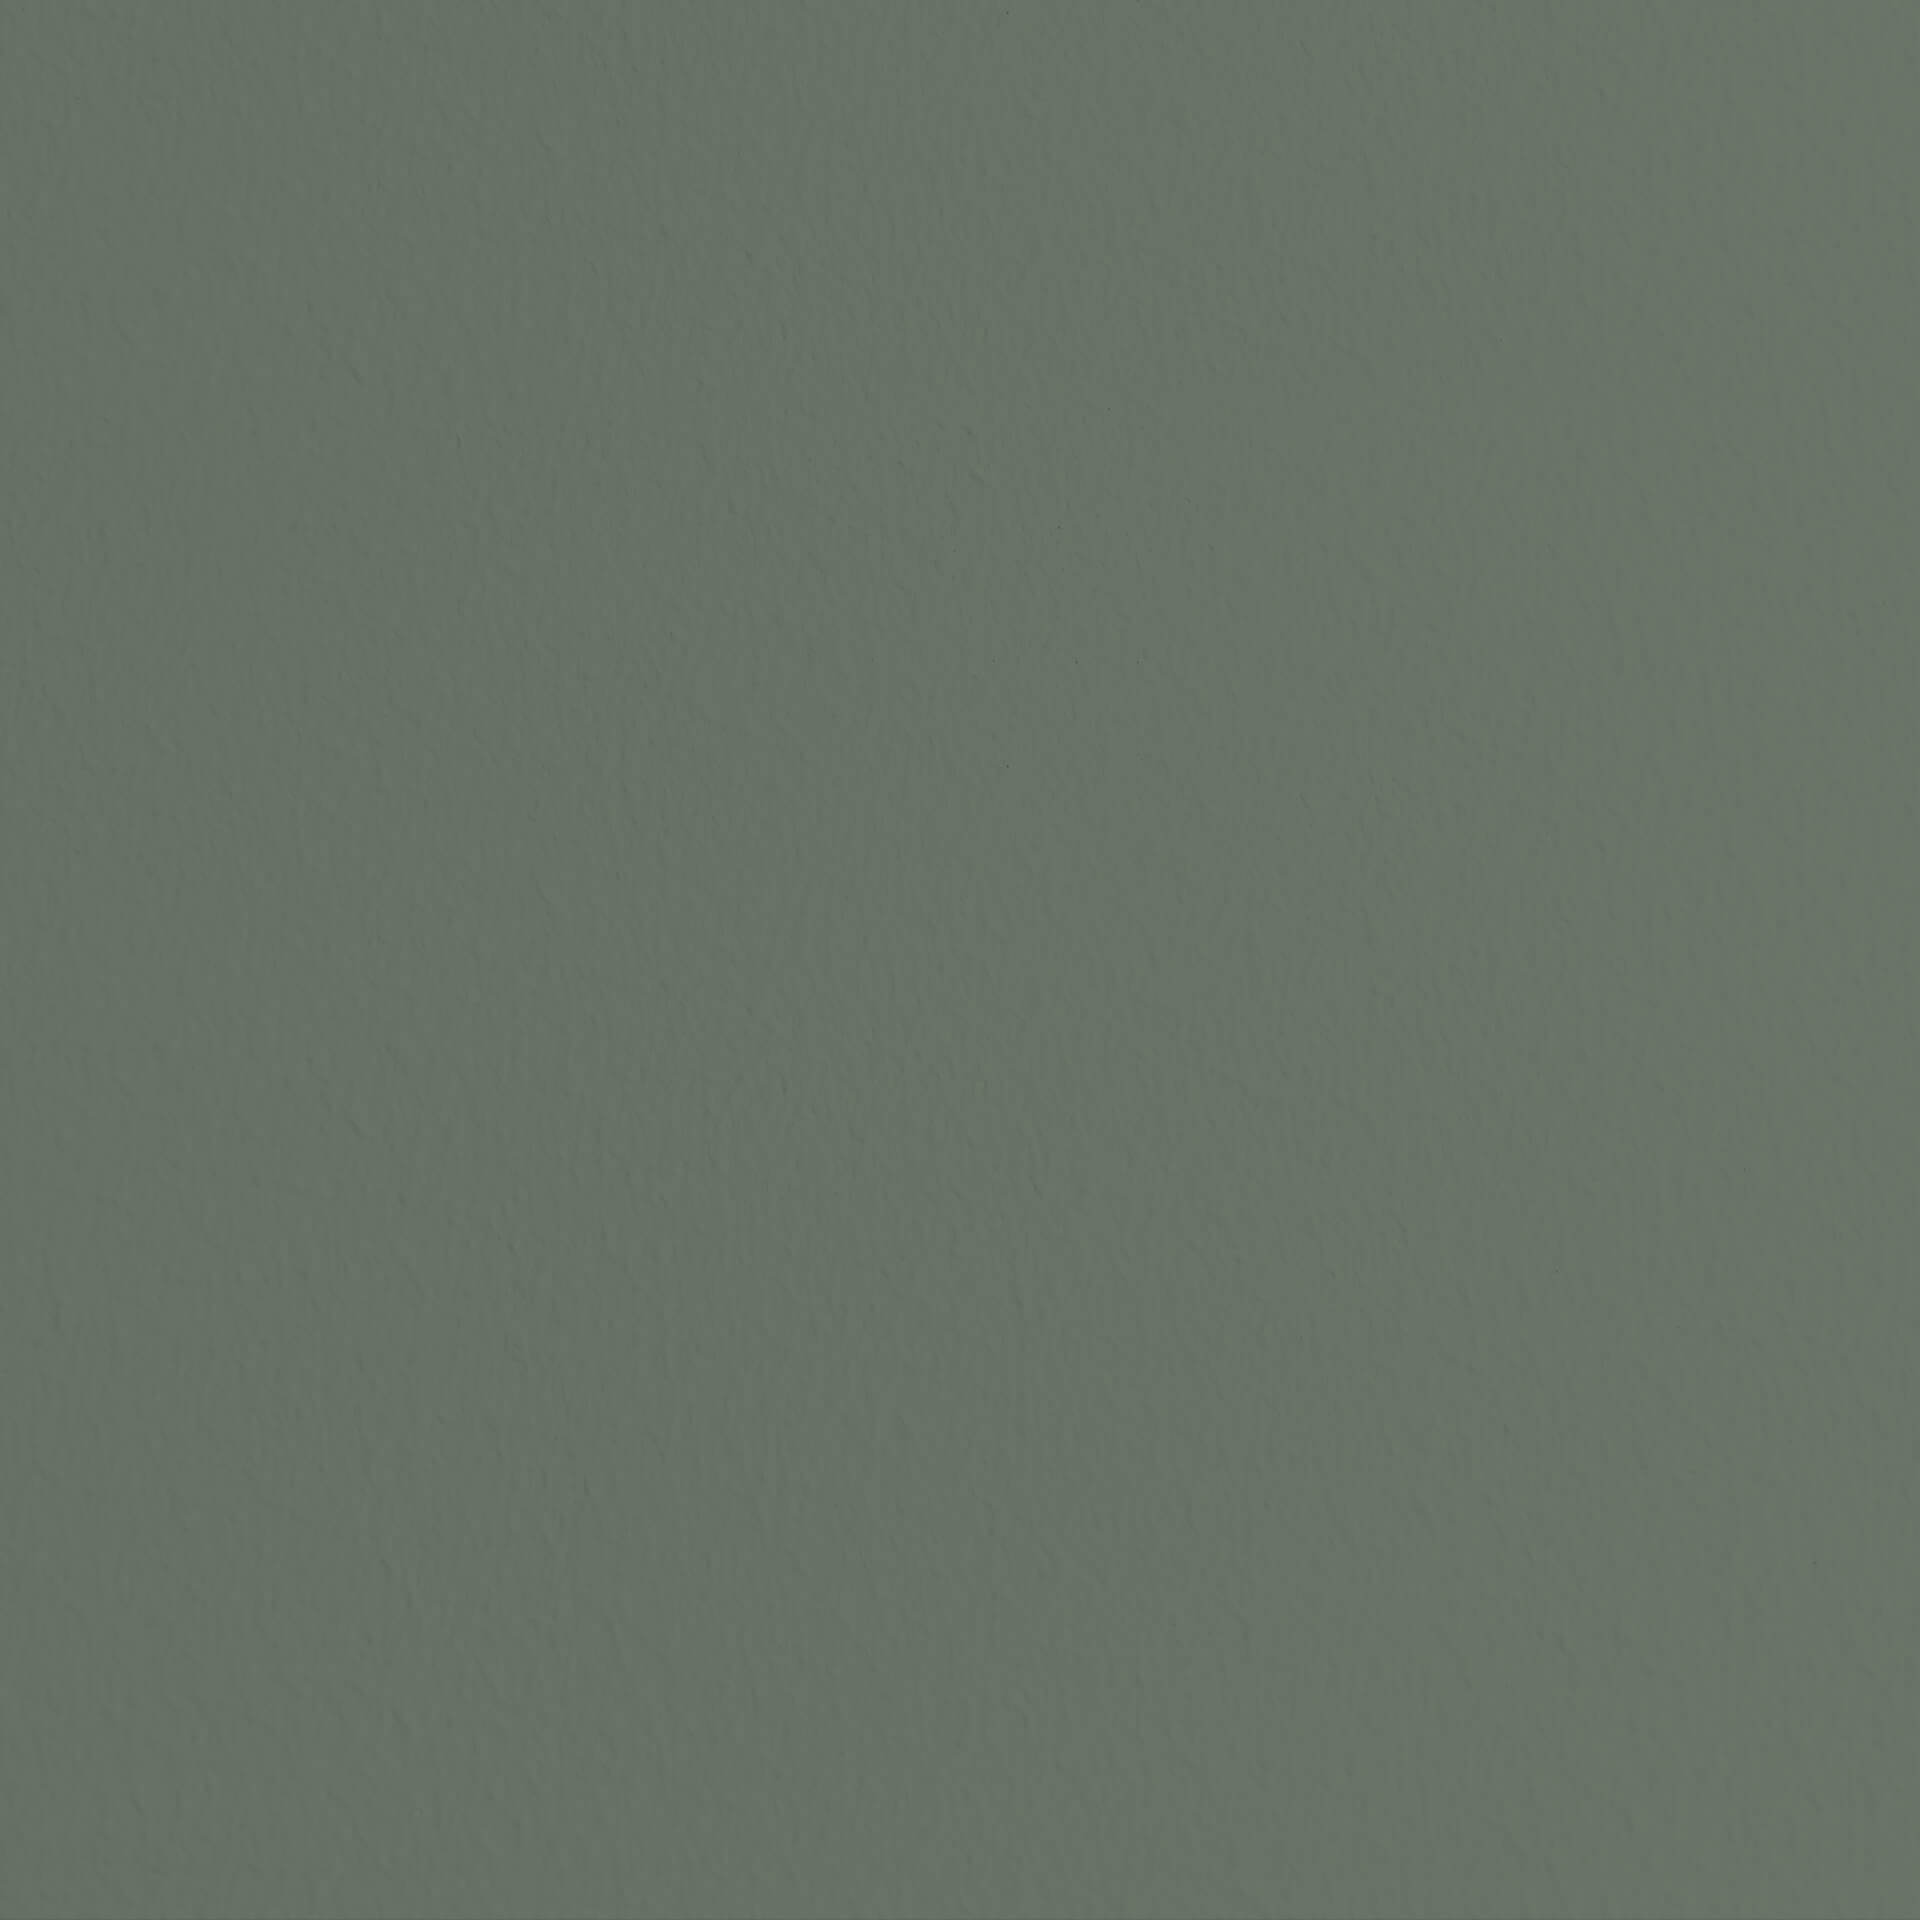 Mylands Myrtle Green No. 168 - Marble Matt Emulsion / Wandfarbe, 5L